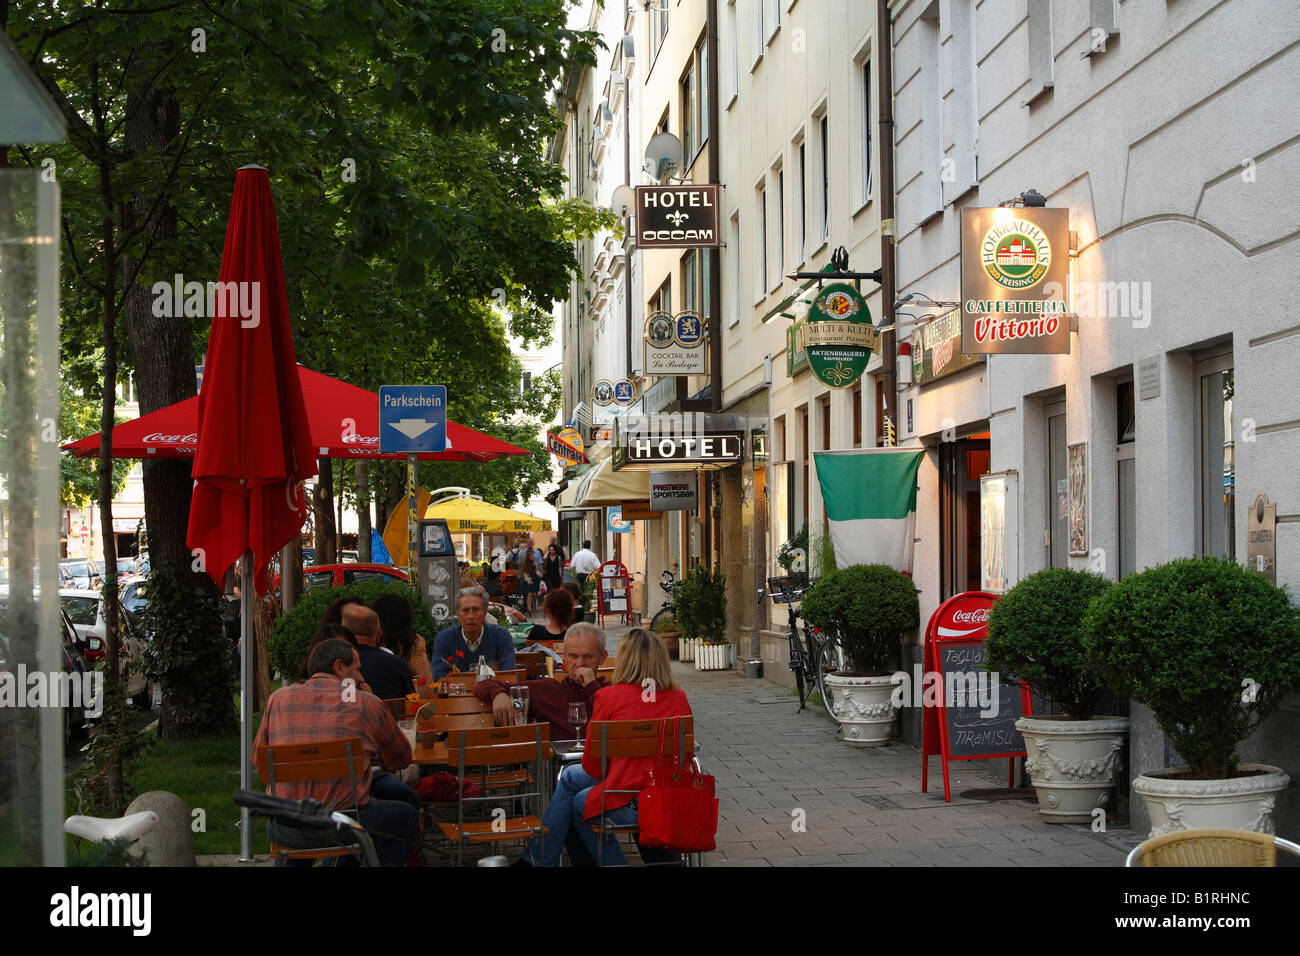 Pubs on Occamstrasse Street, Schwabing, Munich, Bavaria, Germany, Europe Stock Photo